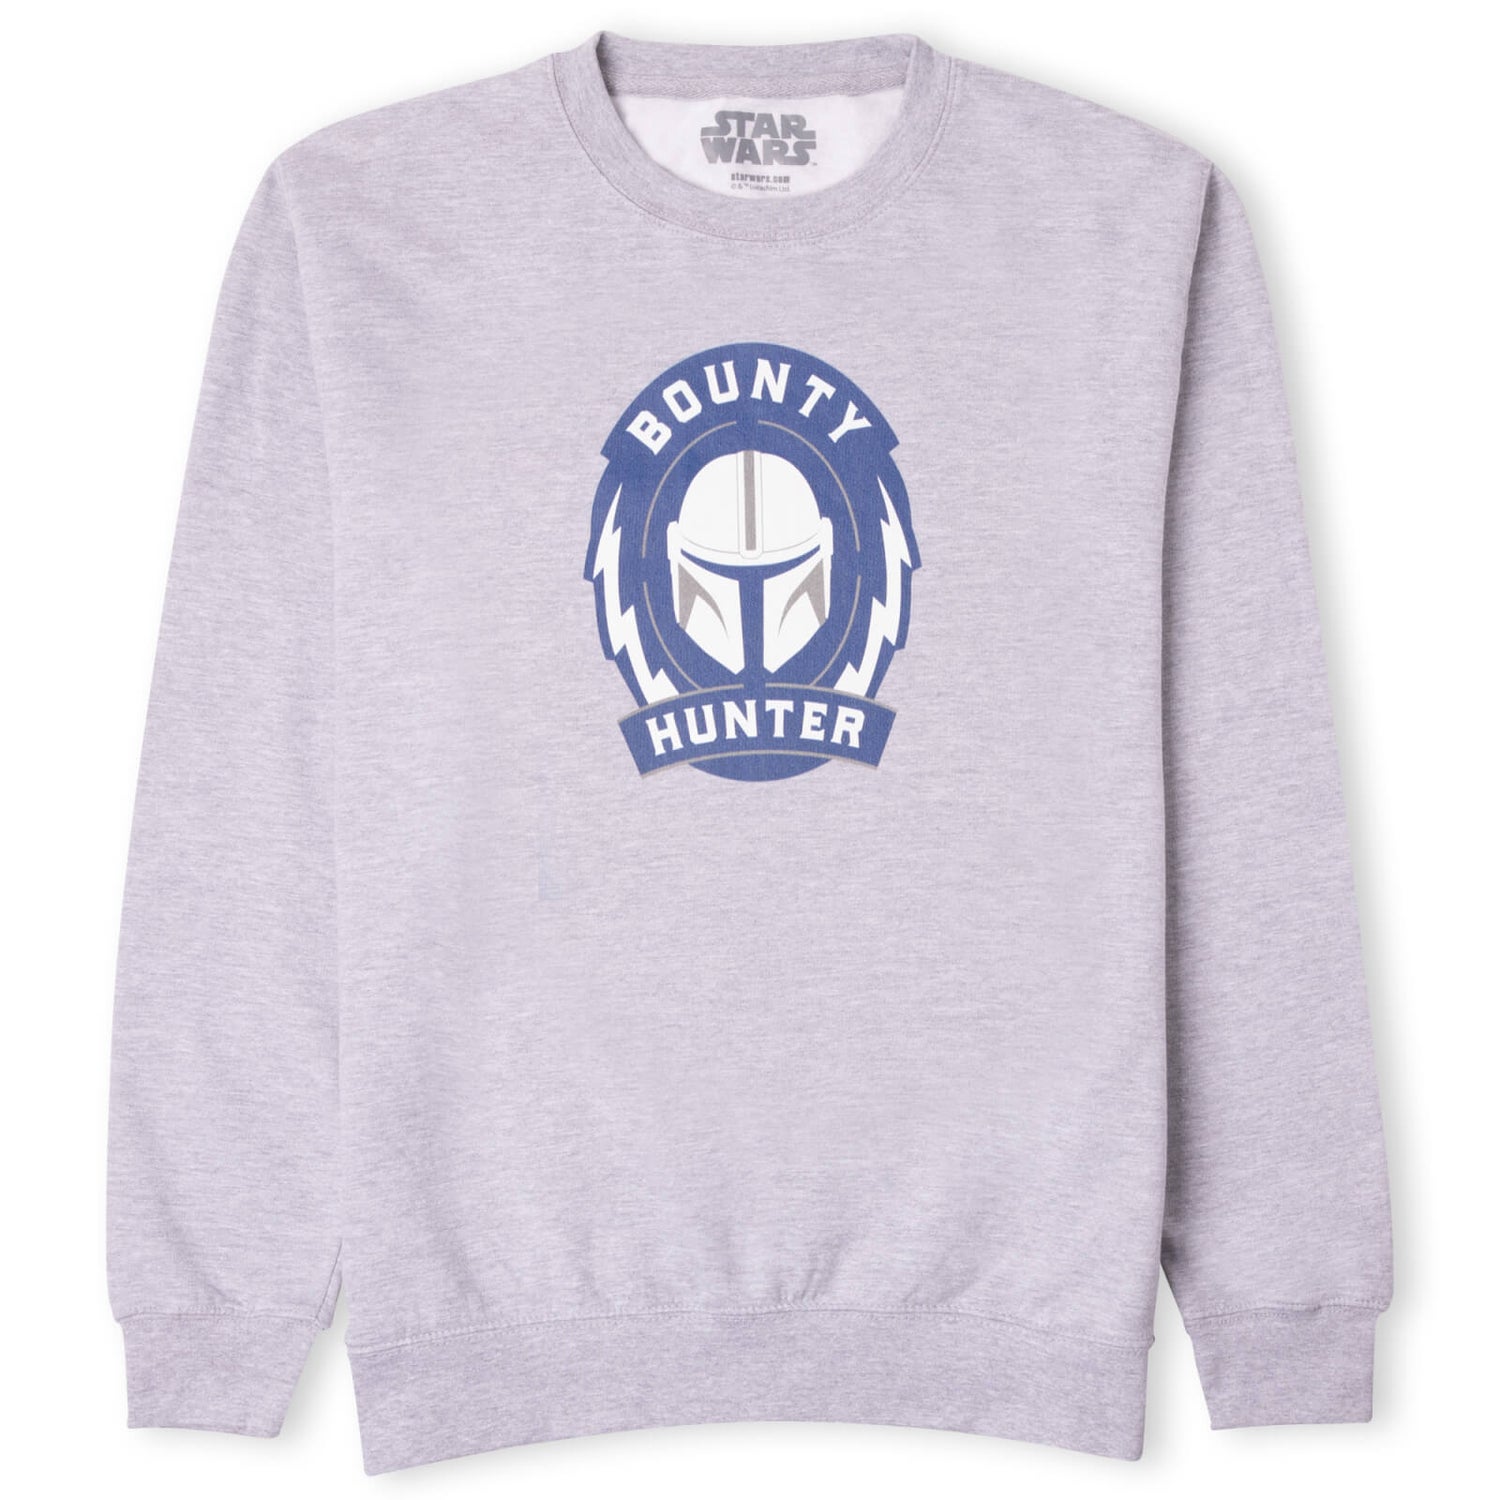 Star Wars The Mandalorian Bounty Hunter Sweatshirt - Grey